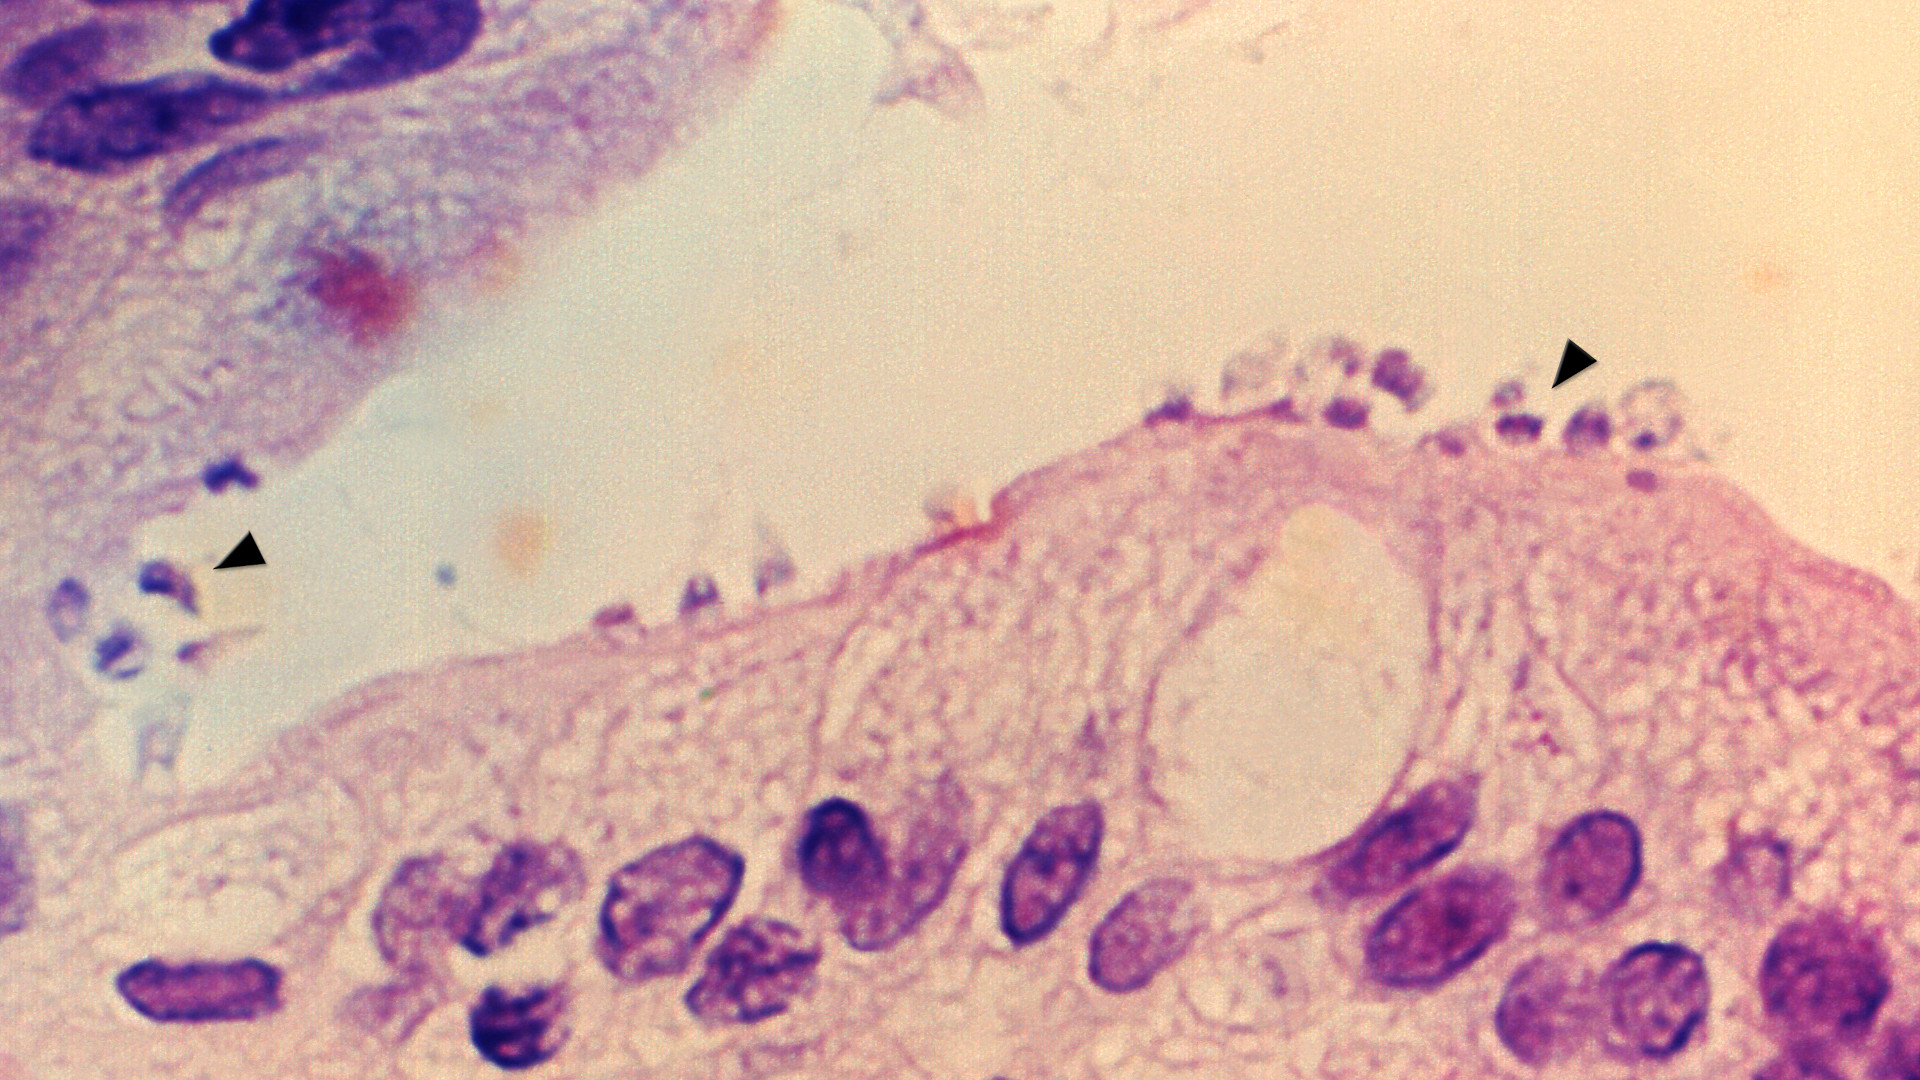 A picture of Cryptosporidium, the parasite that causes cryptosporidiosis.